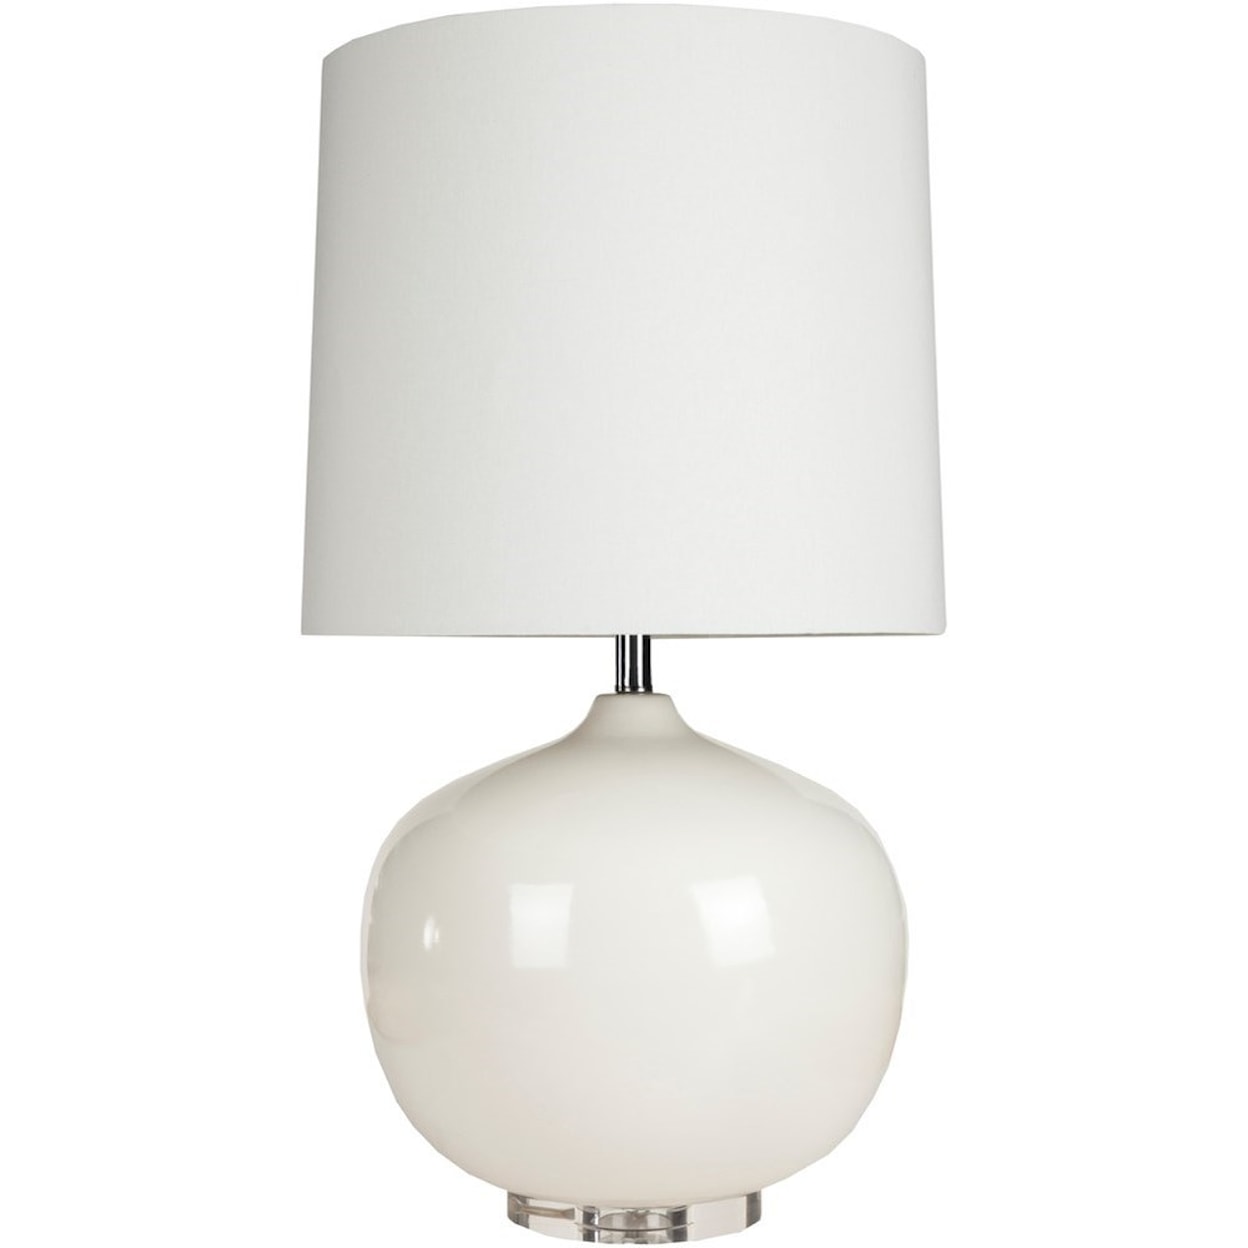 Surya Lamps Ivory White Modern Table Lamp